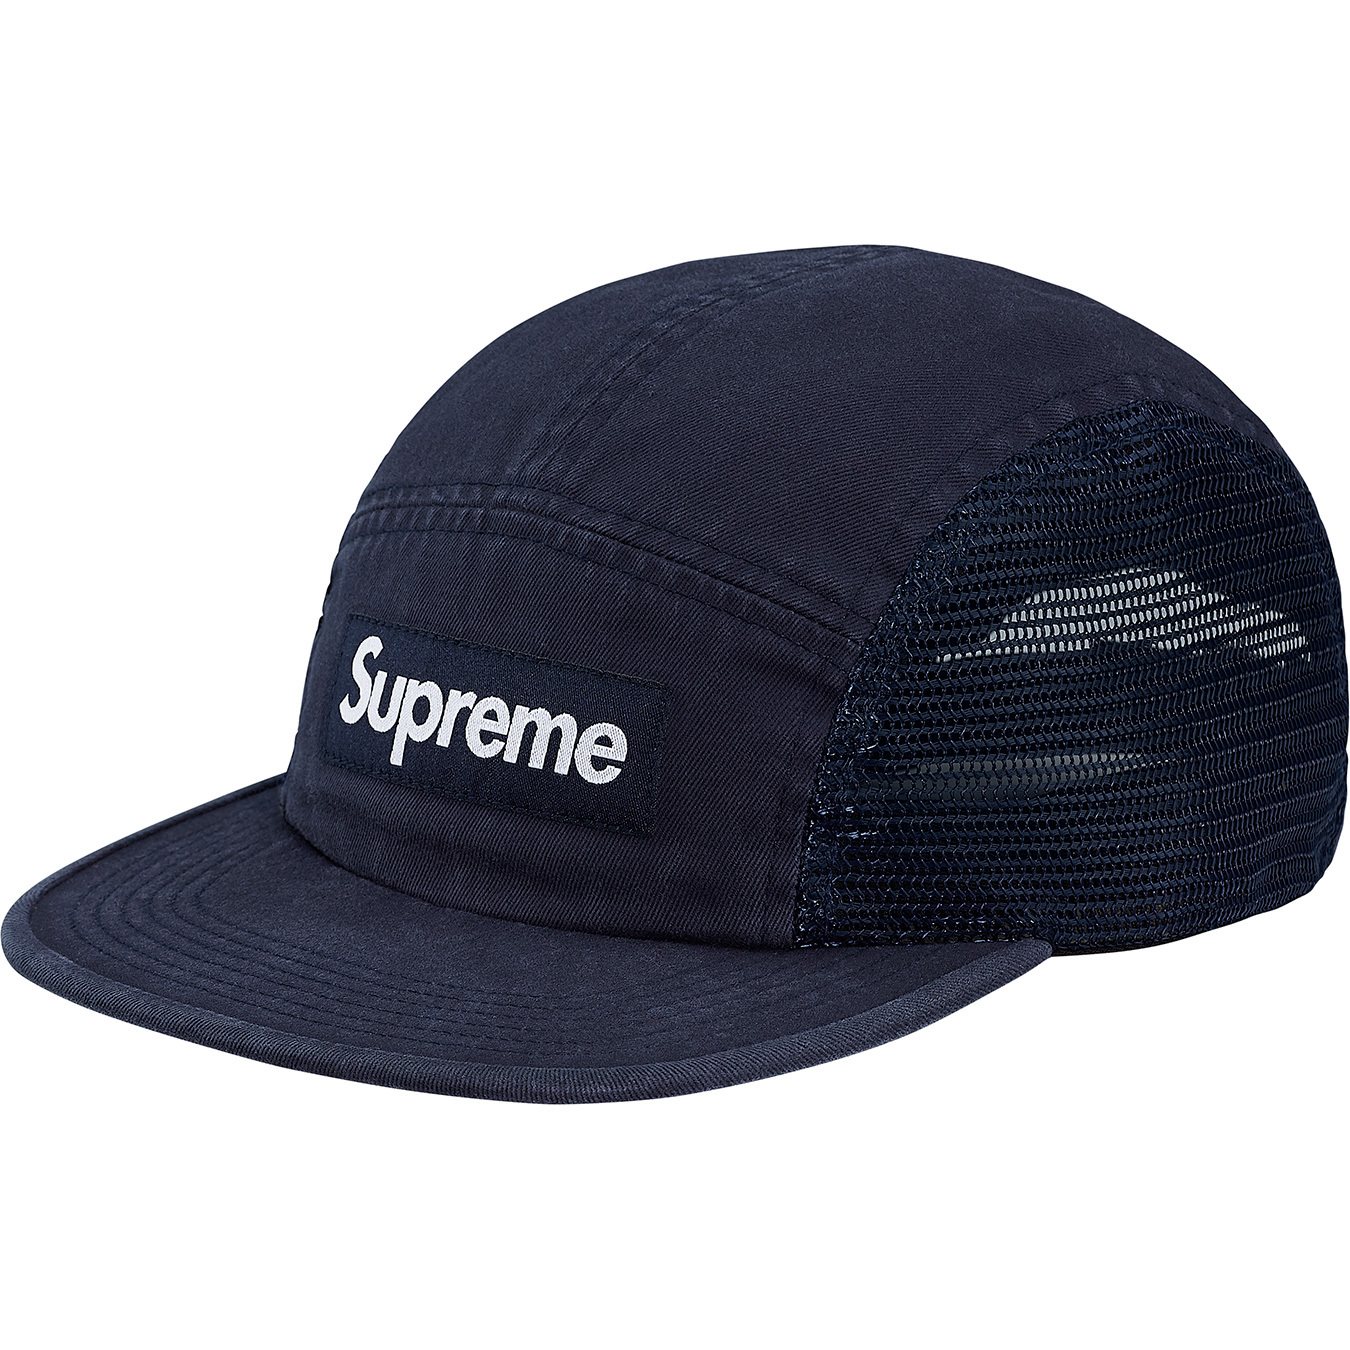 supreme cap navy - 帽子